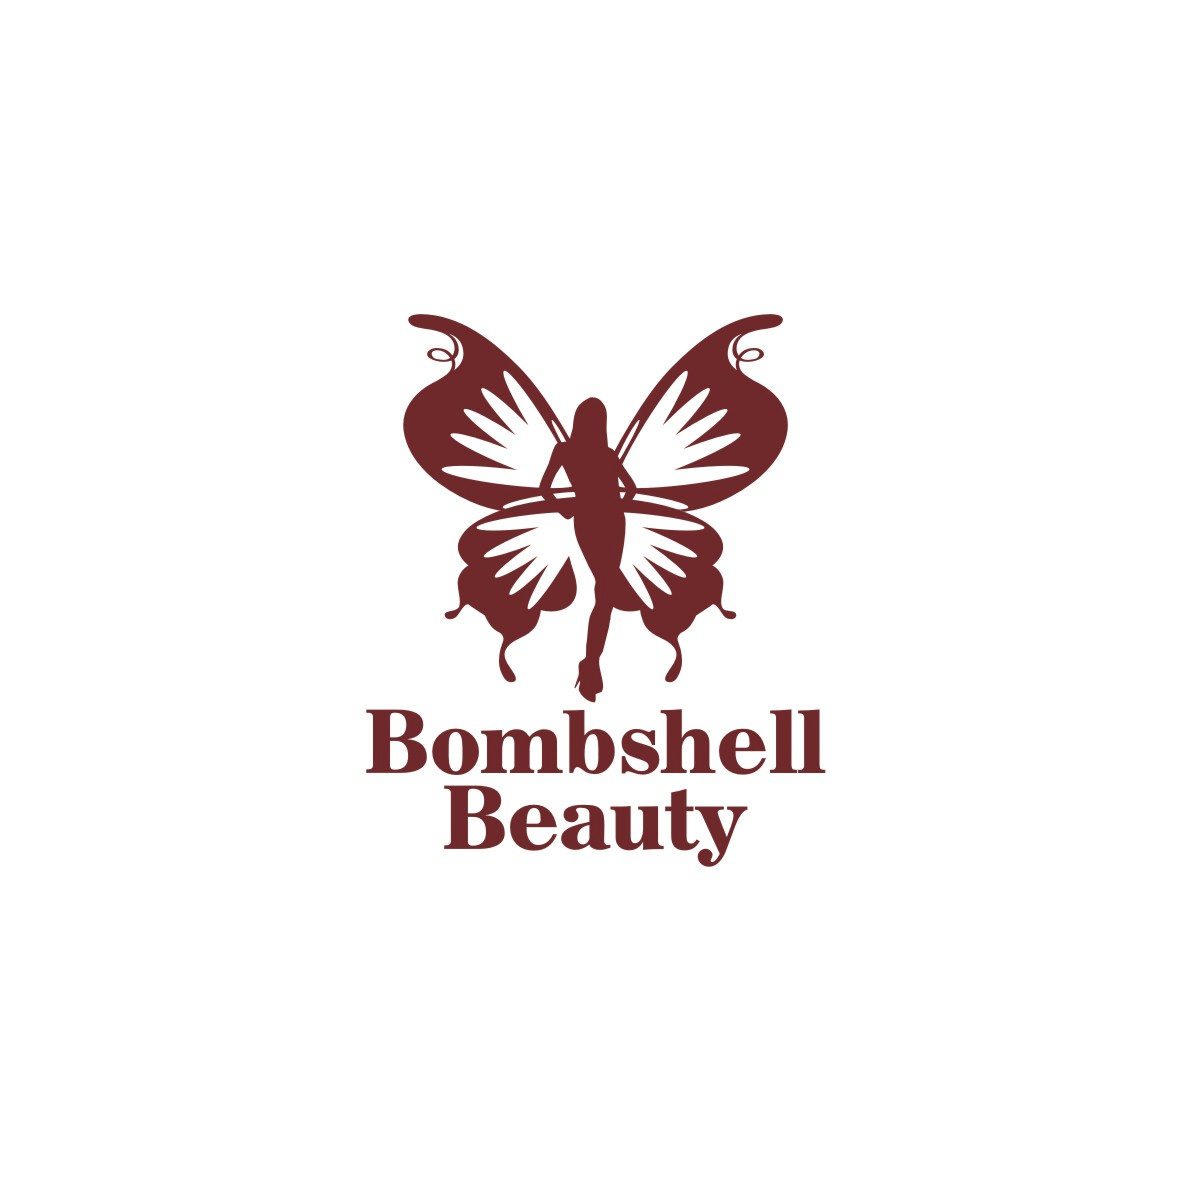 Beauty Company Logo - Logo Design Contests Logo Design Needed for Exciting New Company